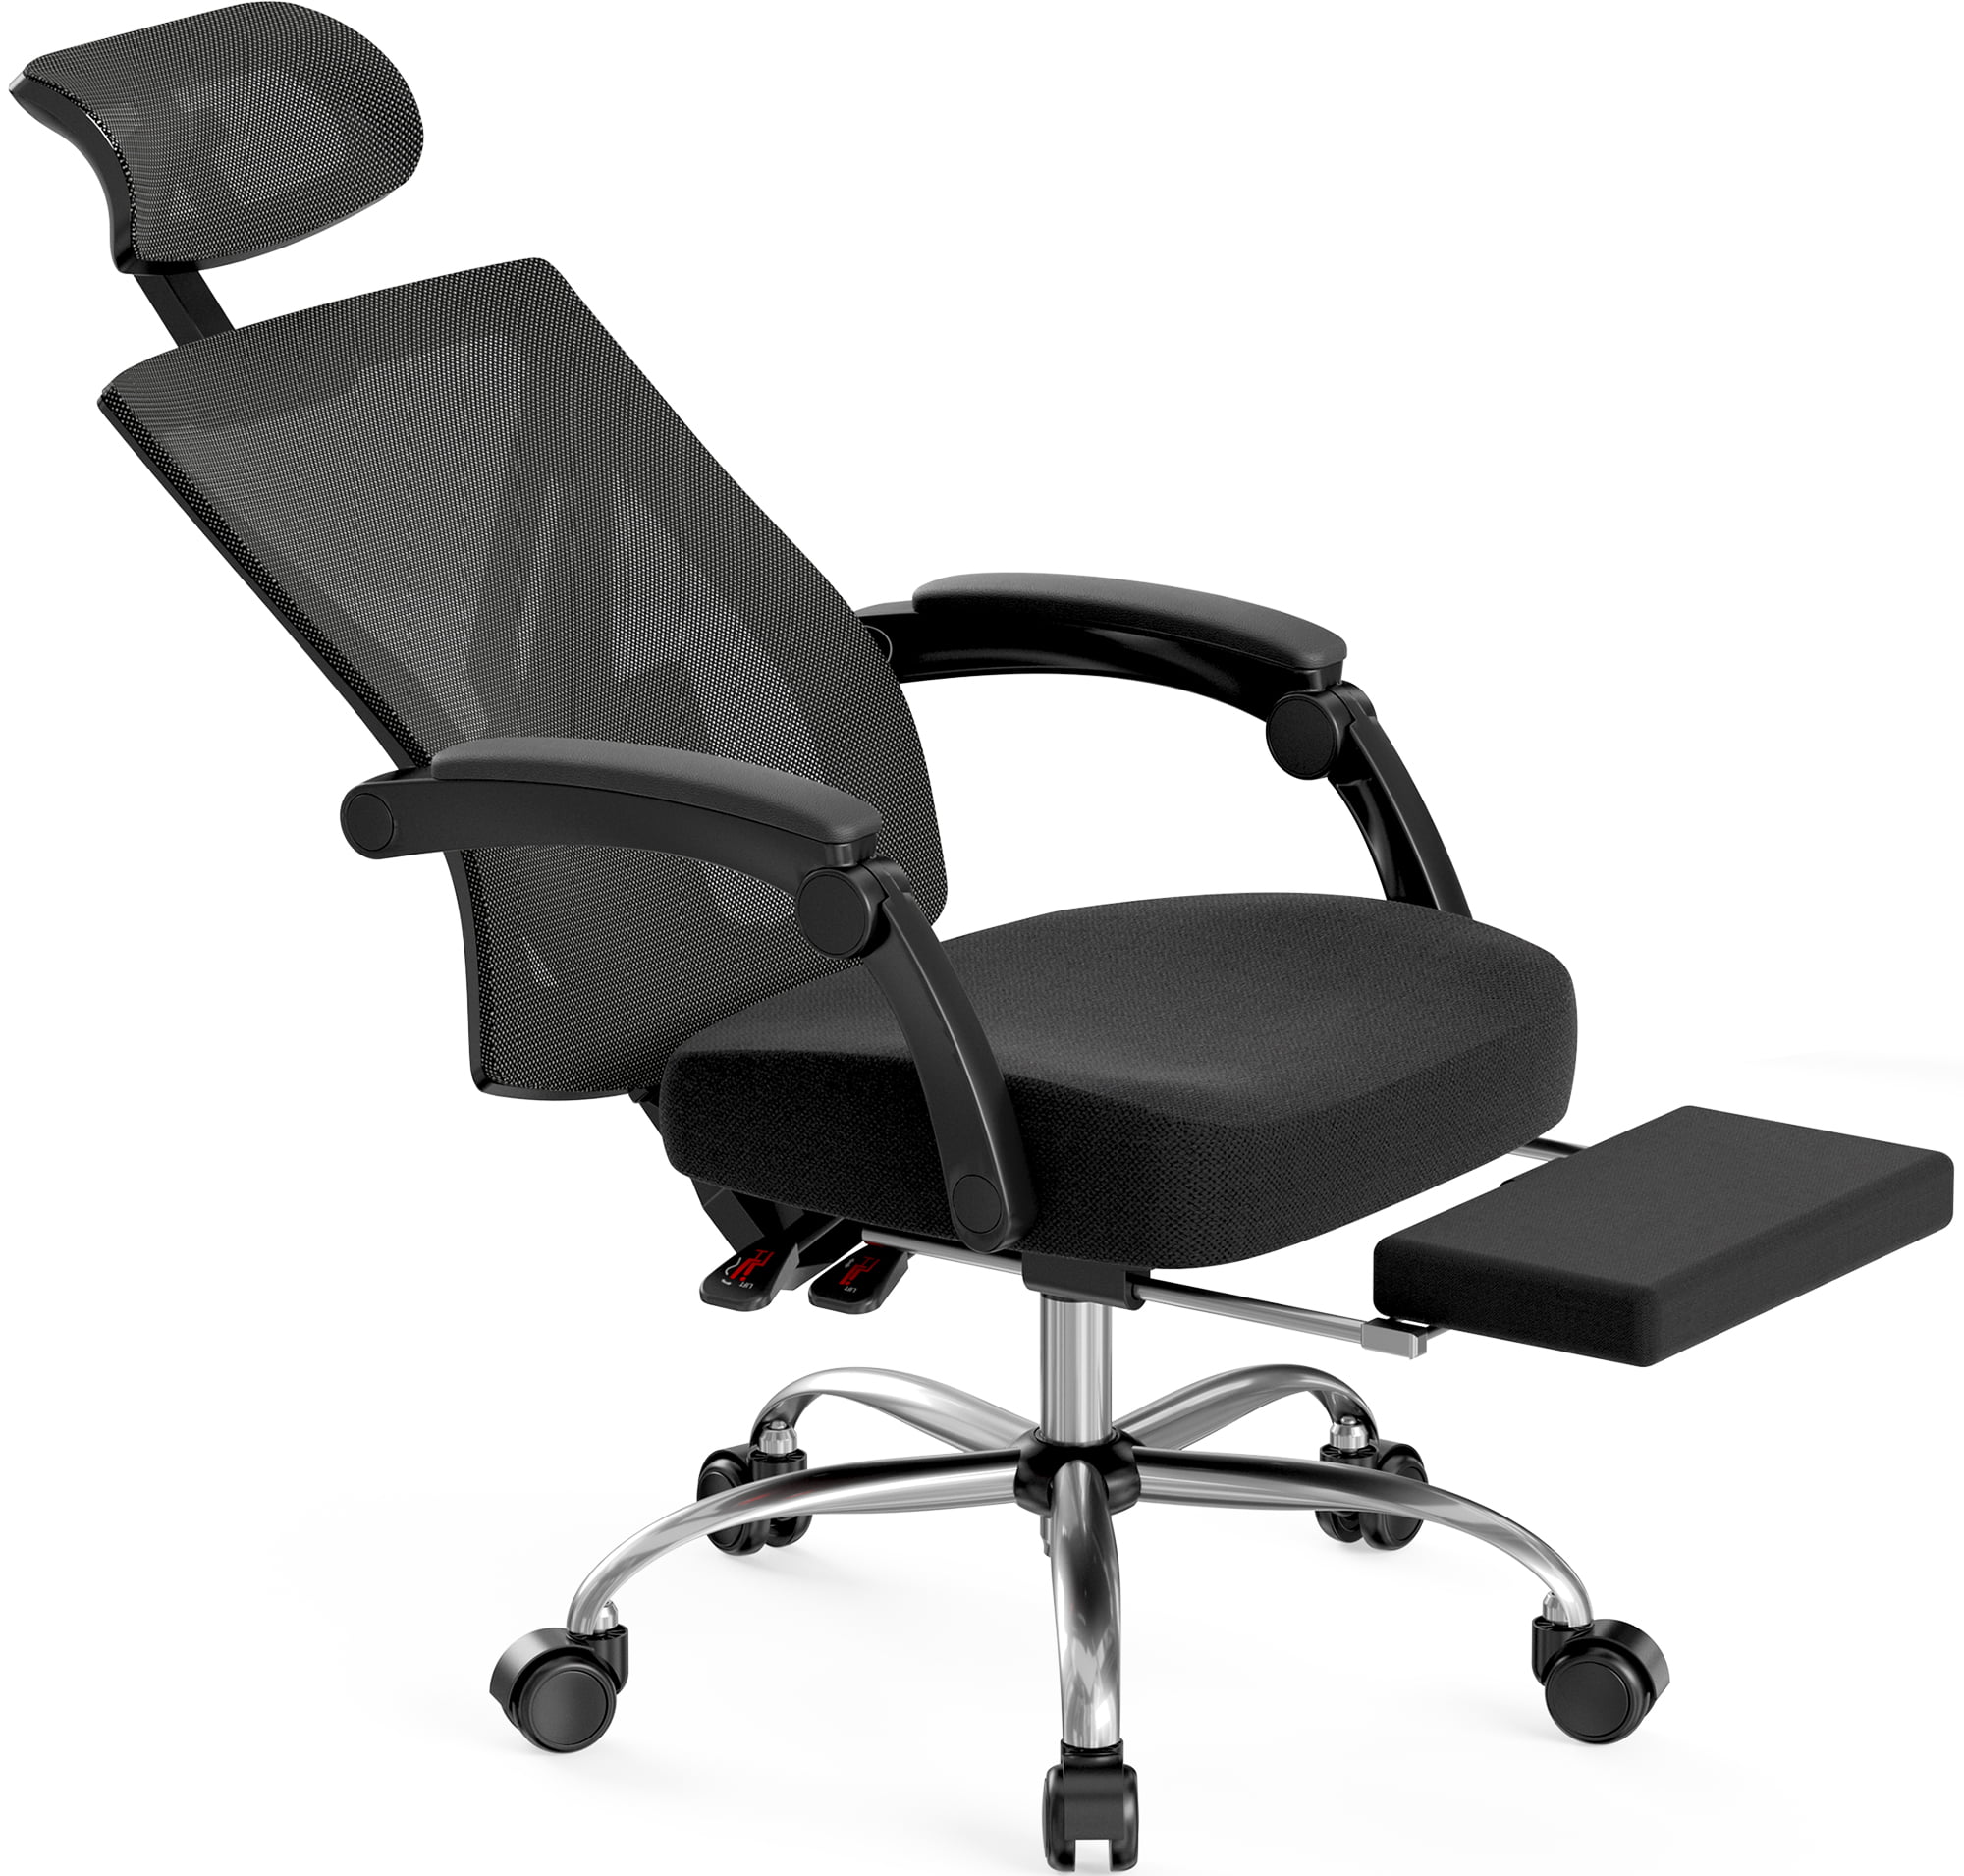 HBADA E1 Ergonomic Chair With Footrest